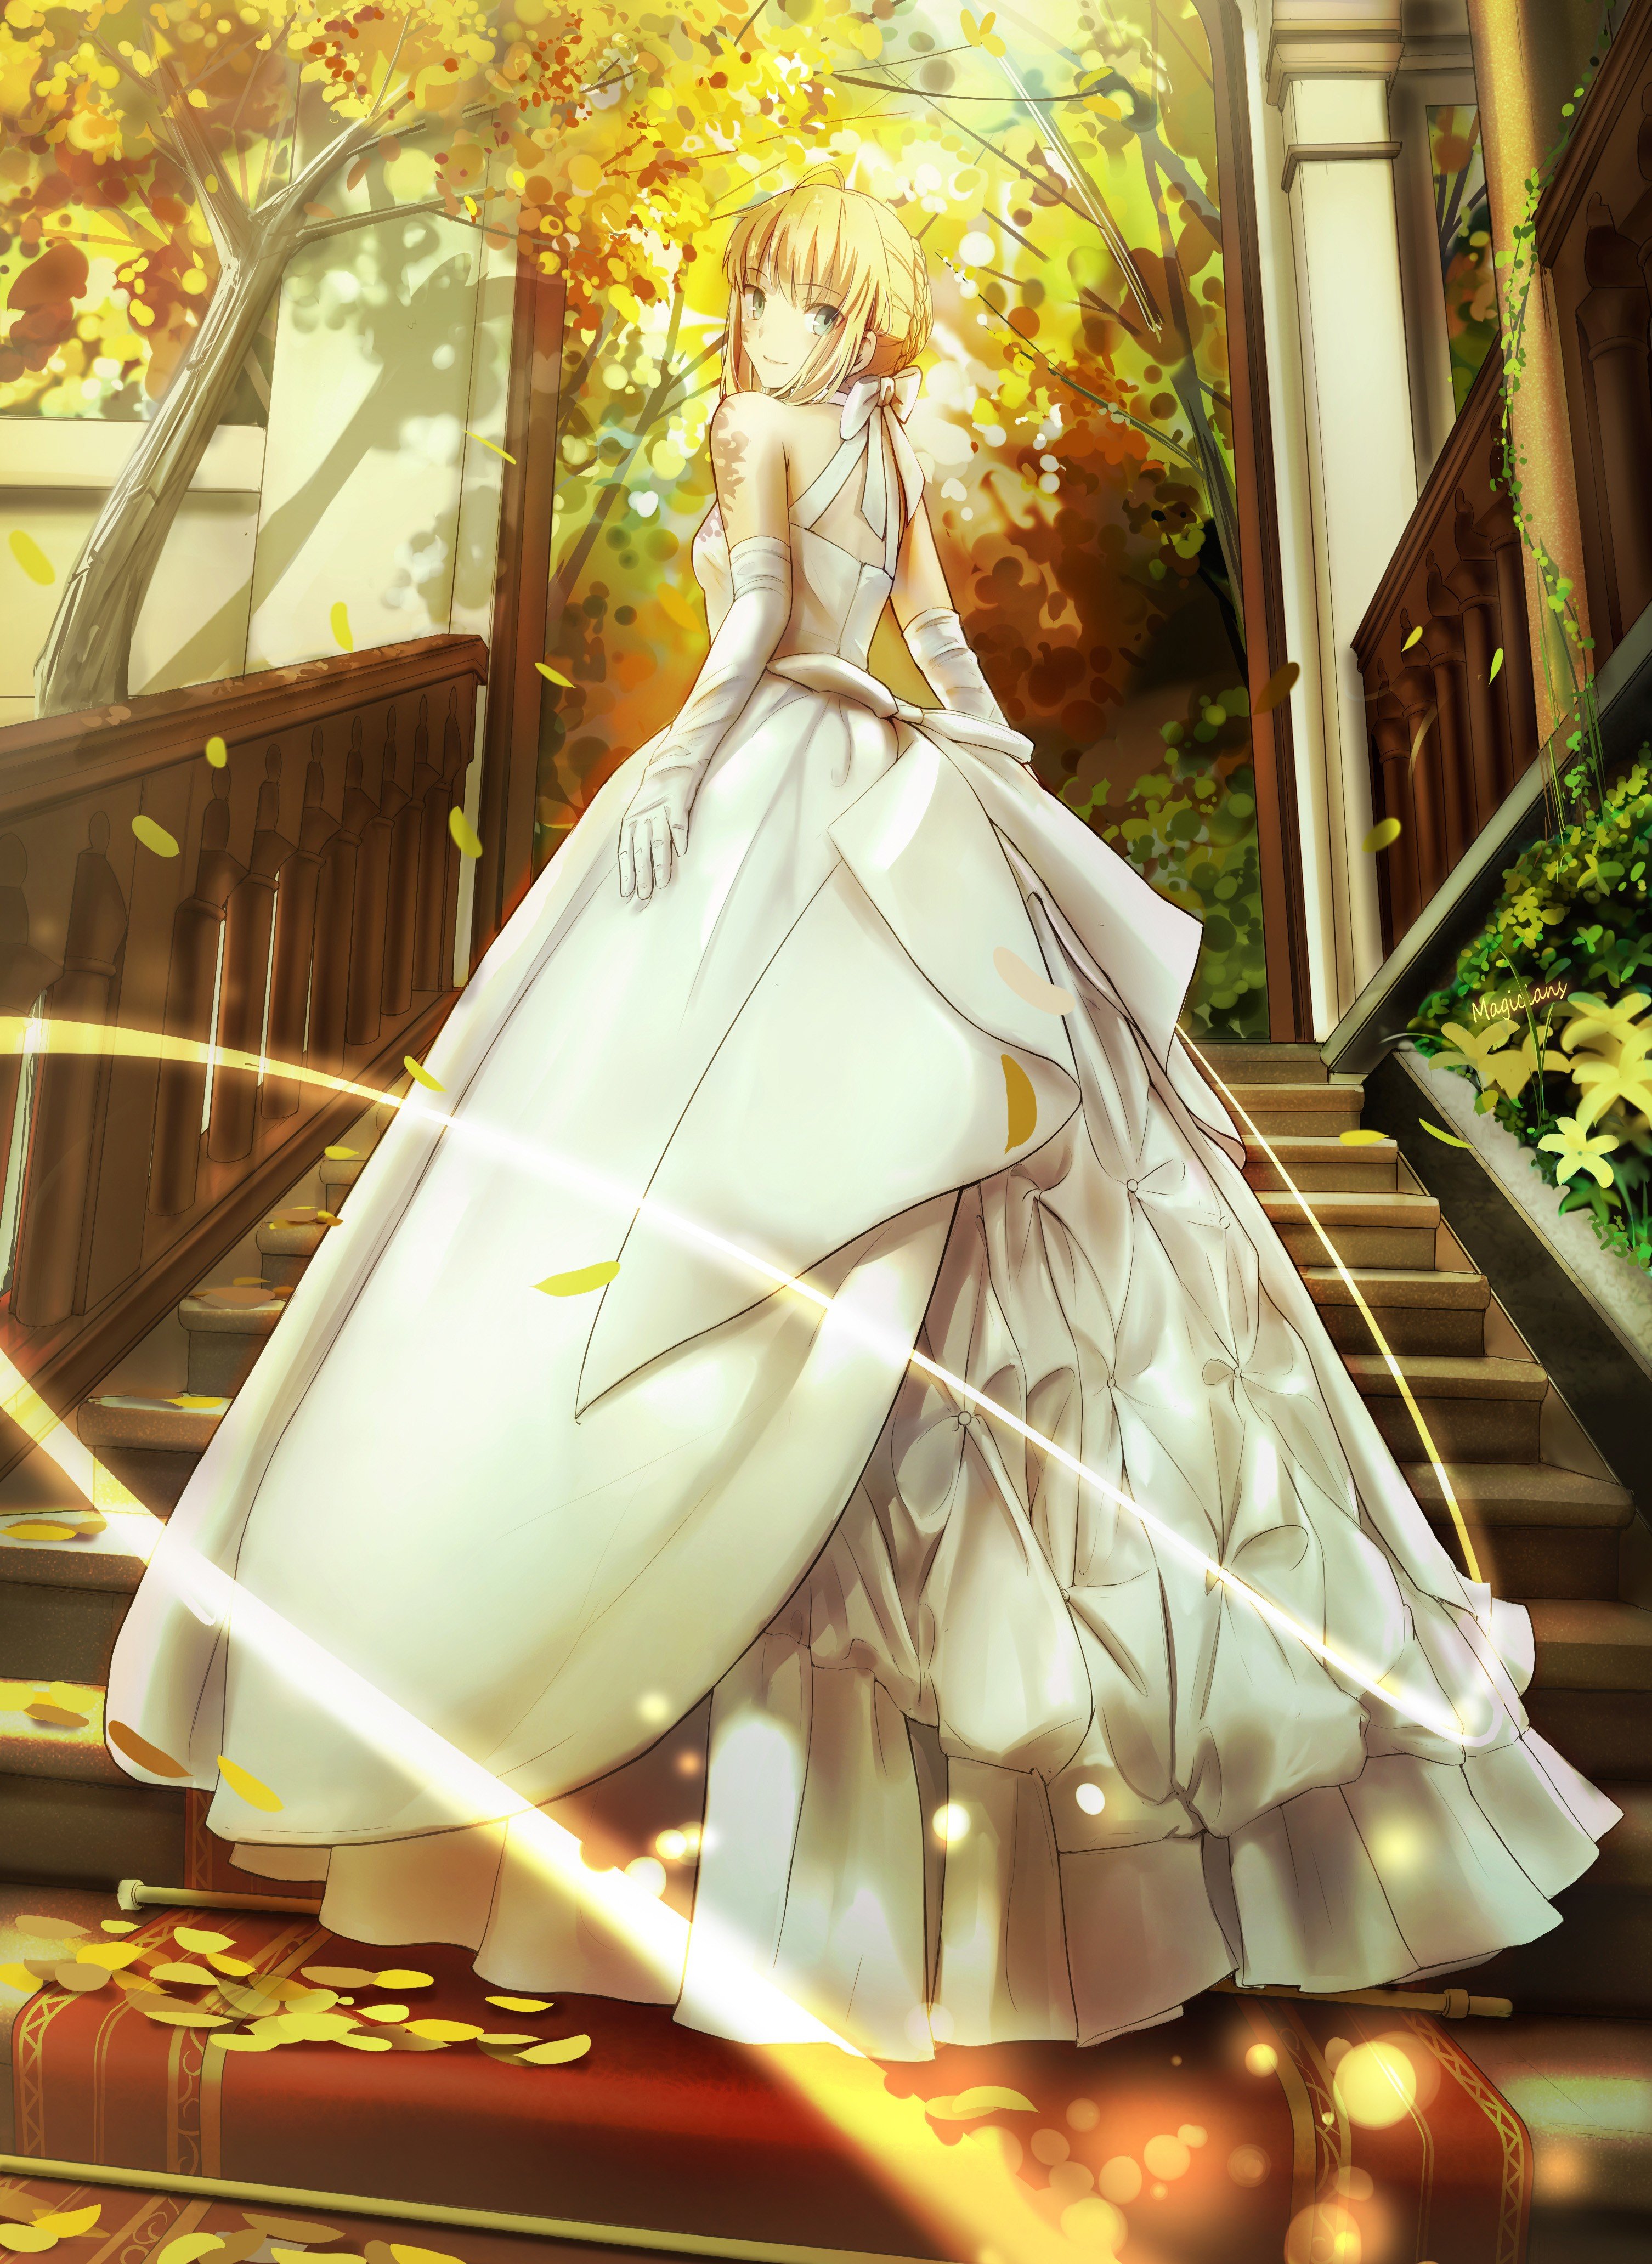 Saber’s Wedding Dress Among Cherry Blossoms